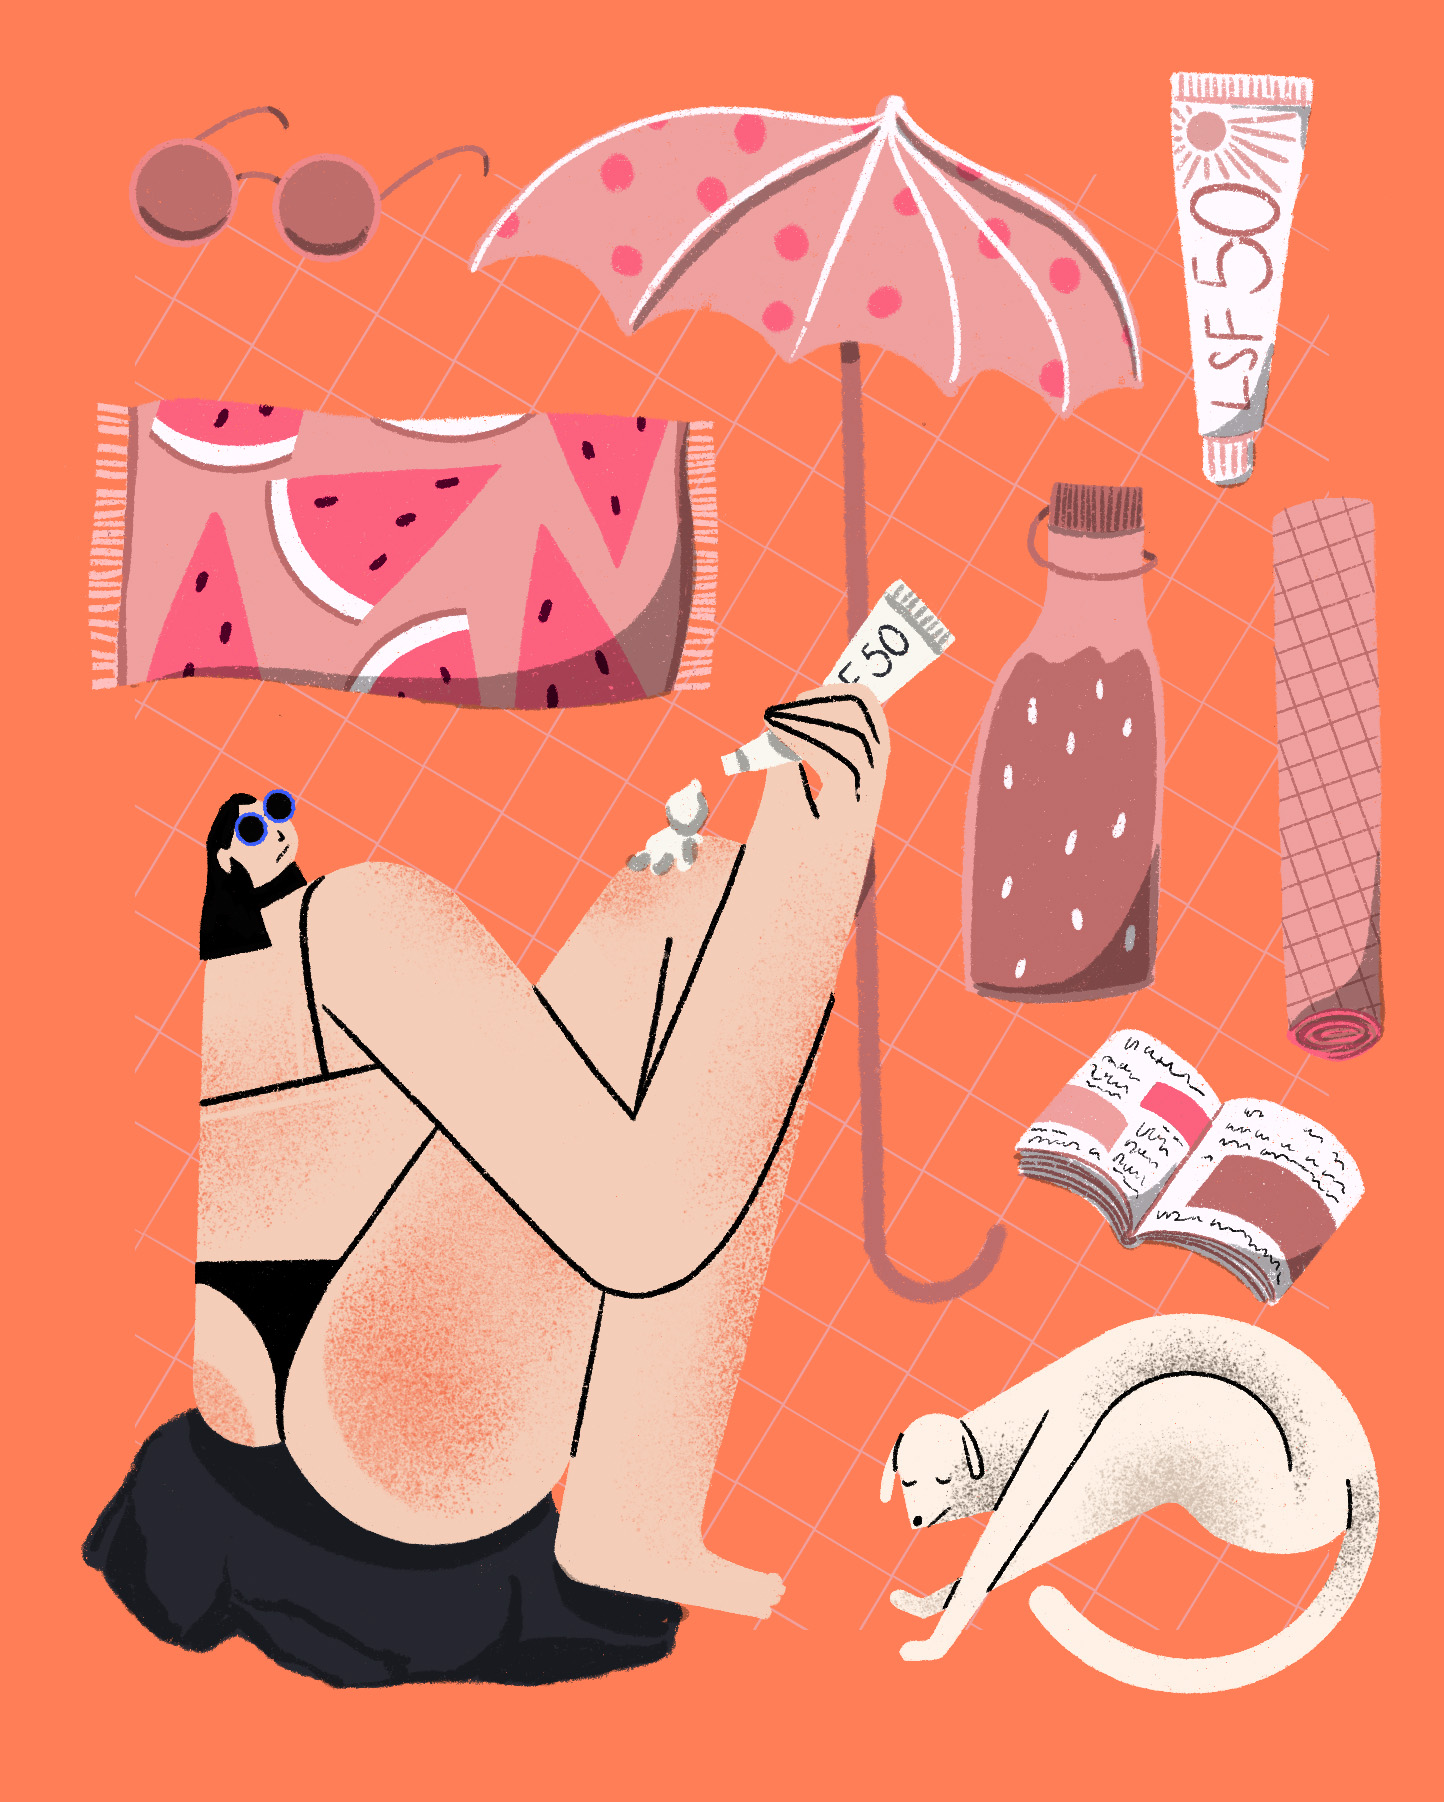 415-loretta-ipsum-illustration-beach-holidays-lifes-sunscreen.jpg